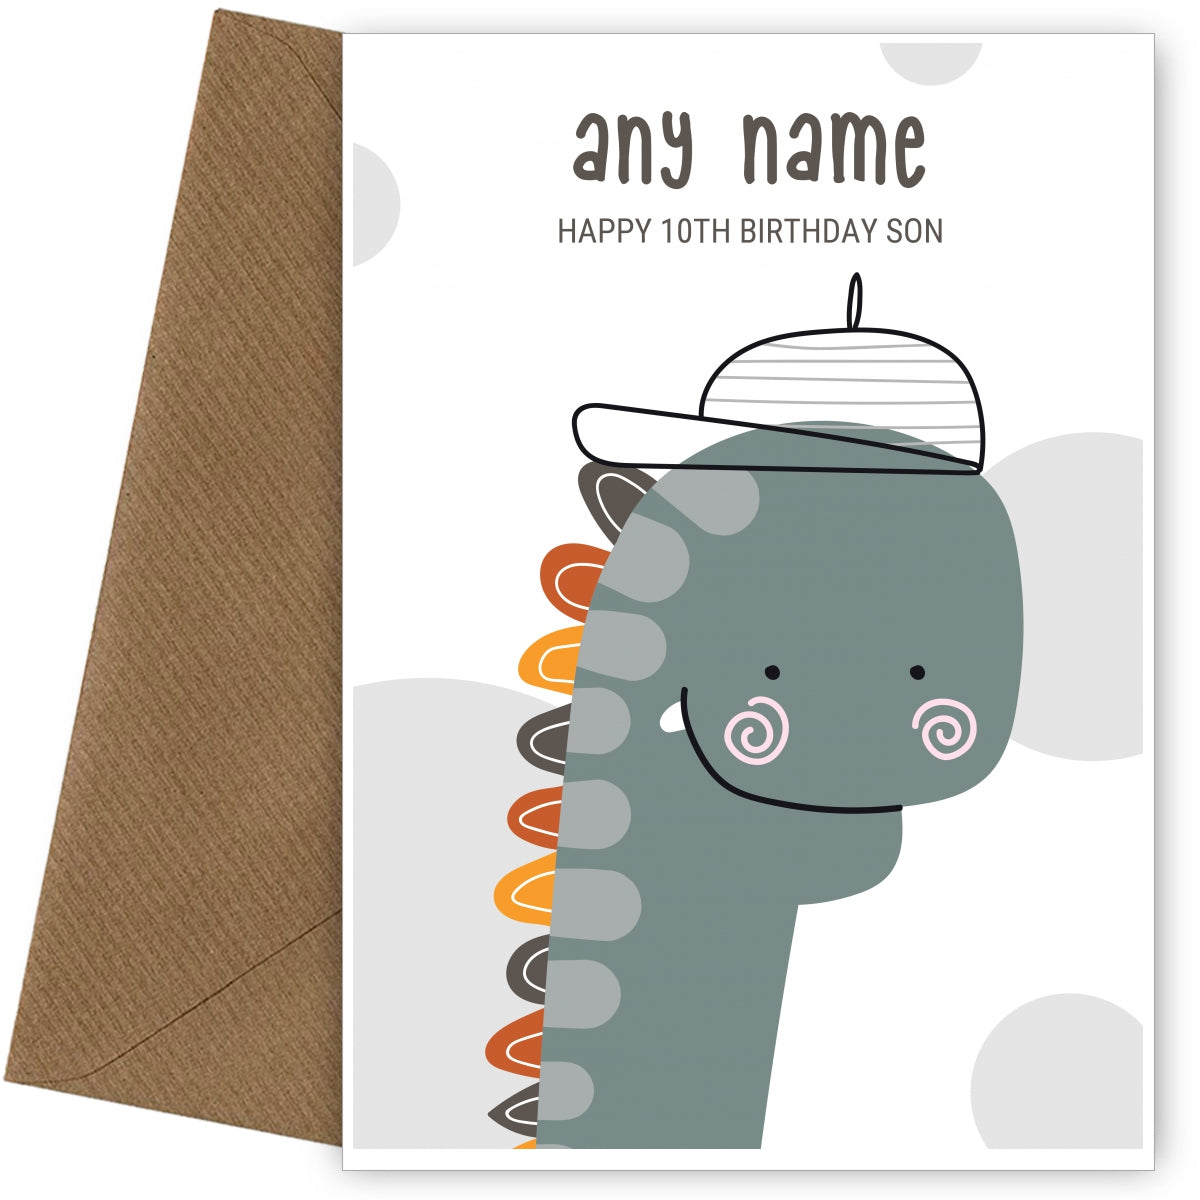 Happy 10th Birthday Card for Son - Dinosaur with Cap